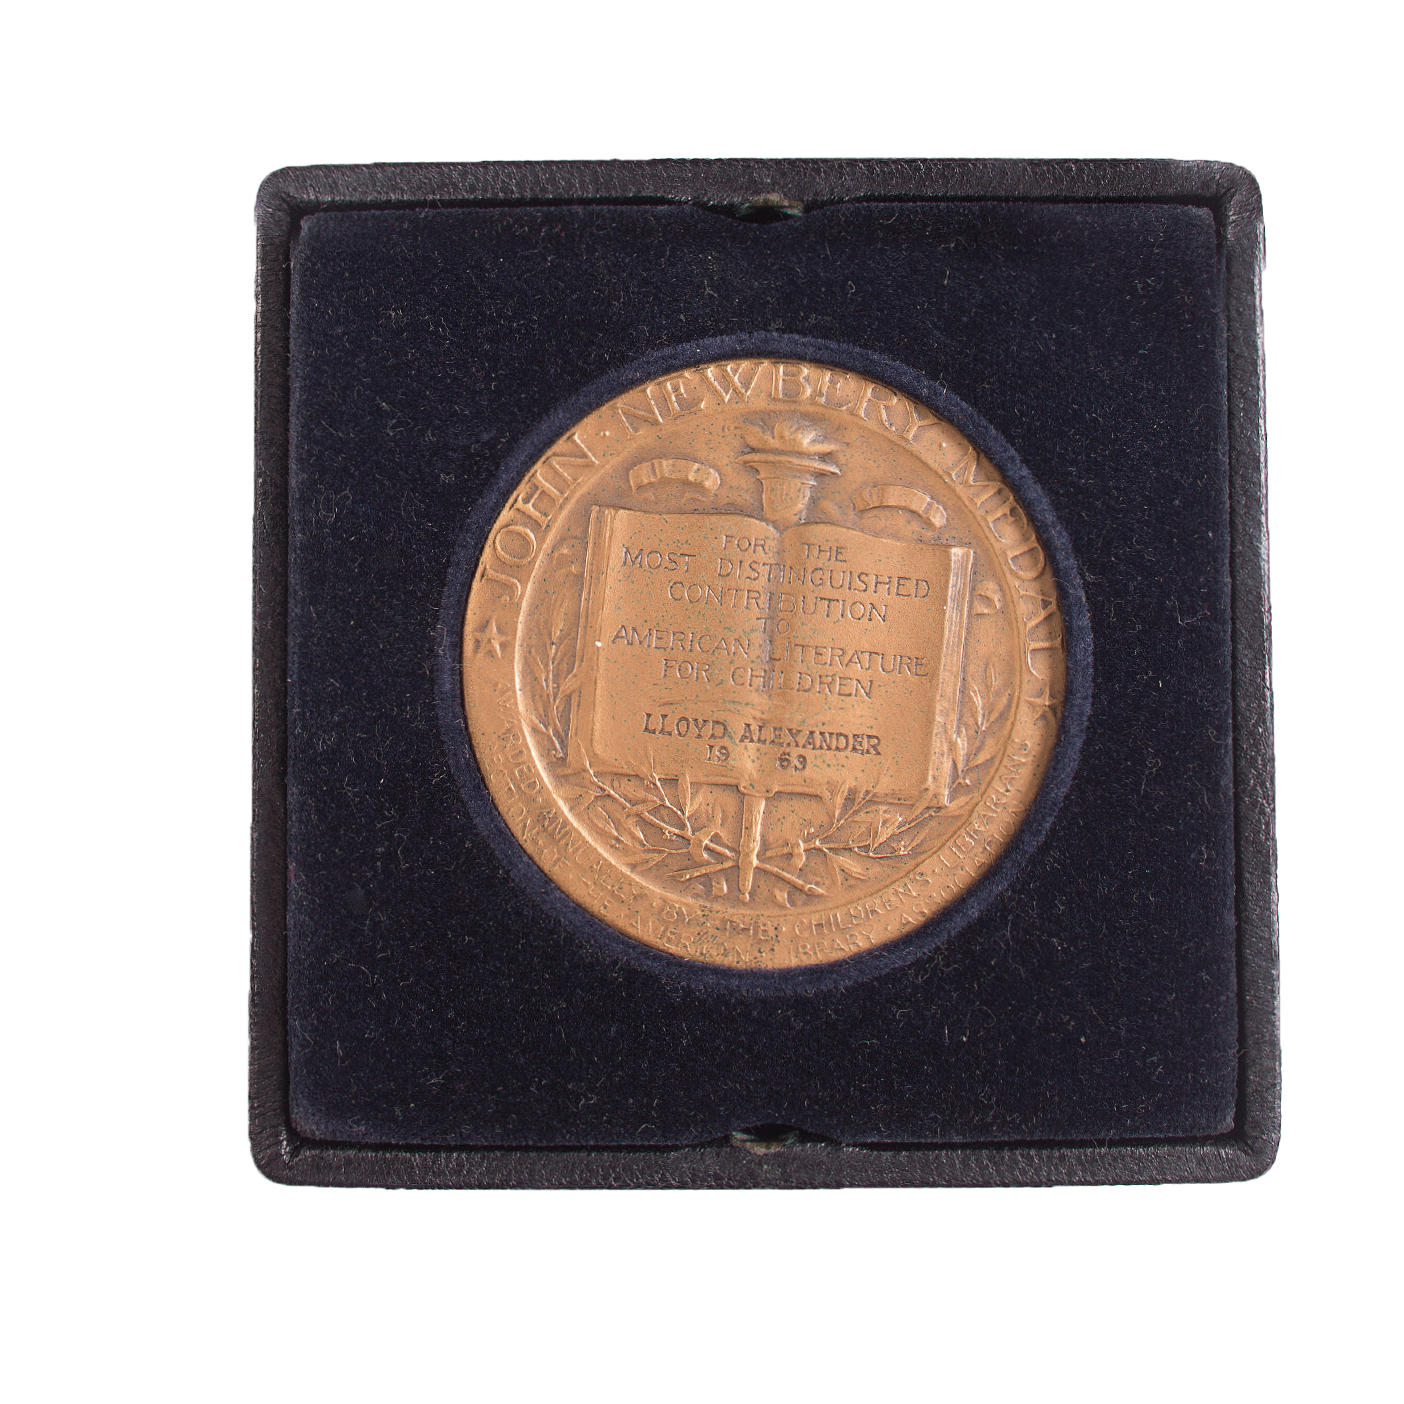 Lloyd Alexander's Newbery Medal